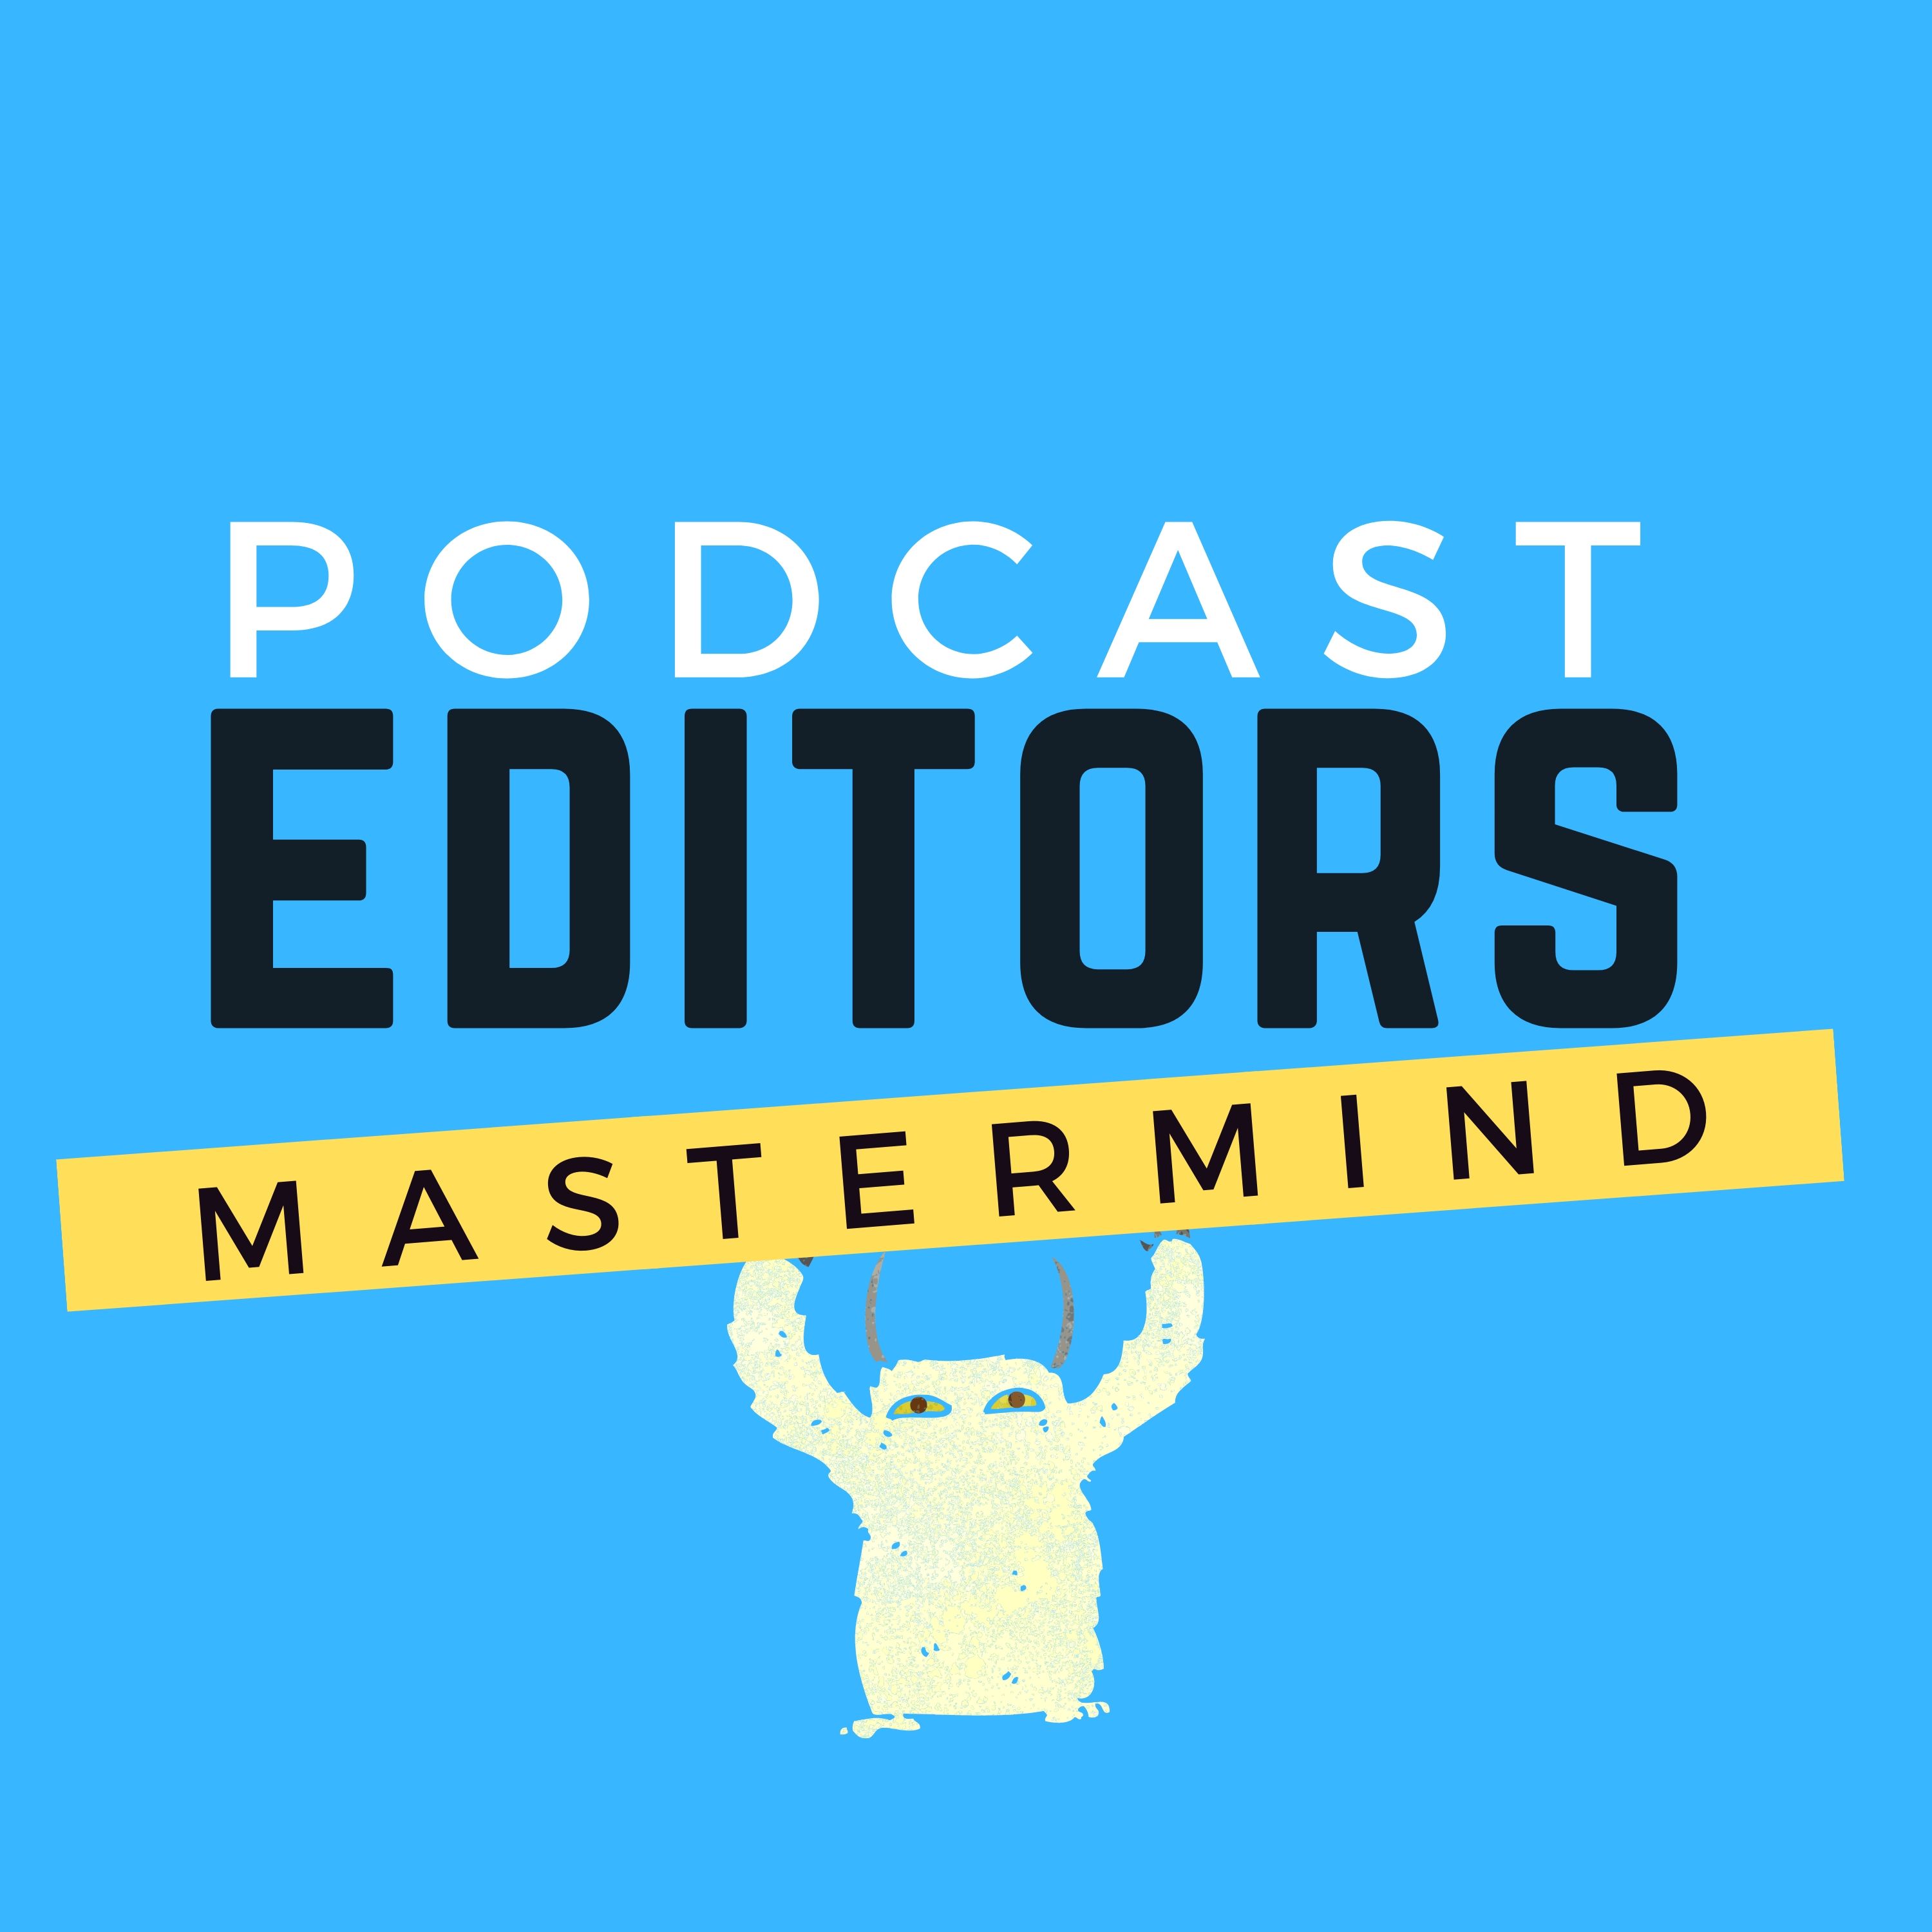 Artwork for podcast Podcast Editors Mastermind